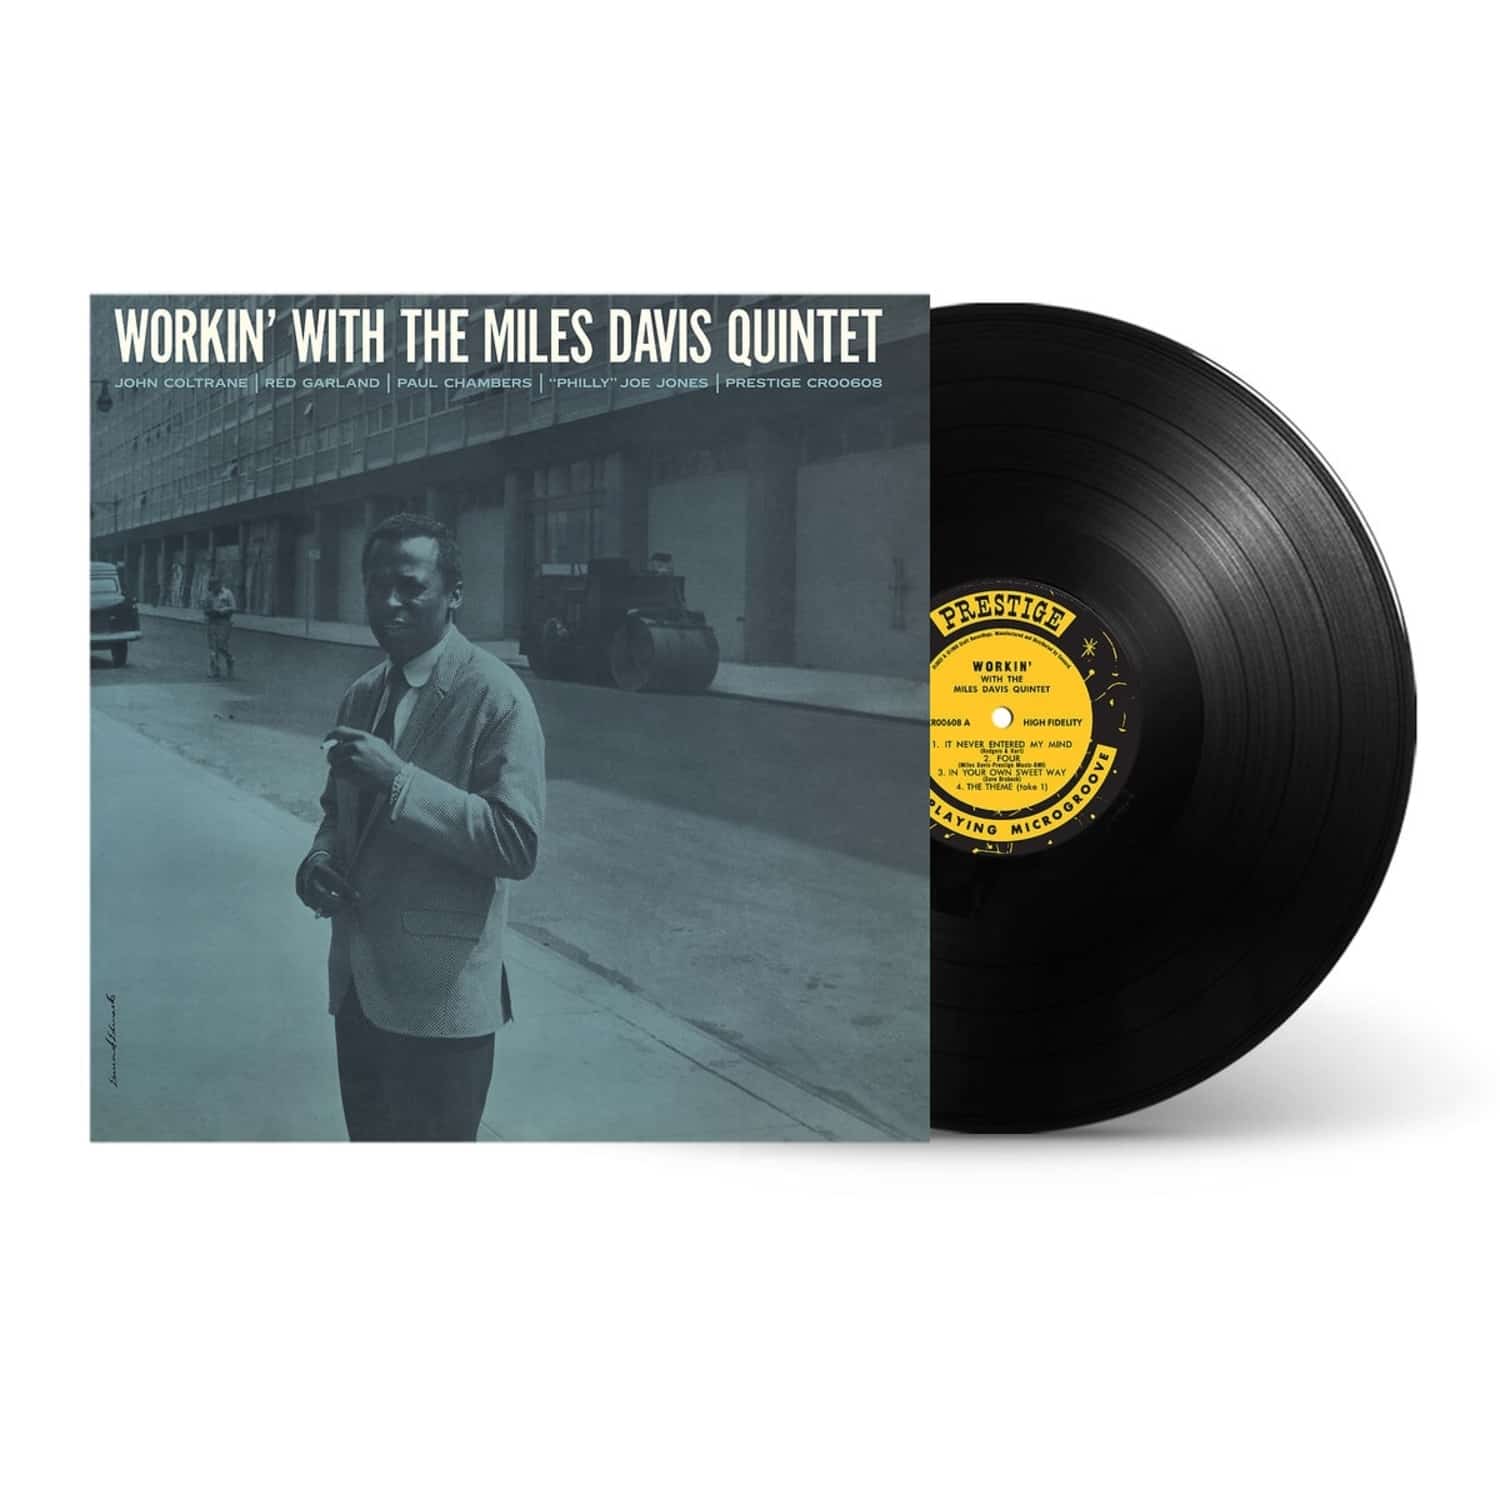 The Miles Davis Quintet - WORKIN WITH THE MILES DAVIS QUINTET 